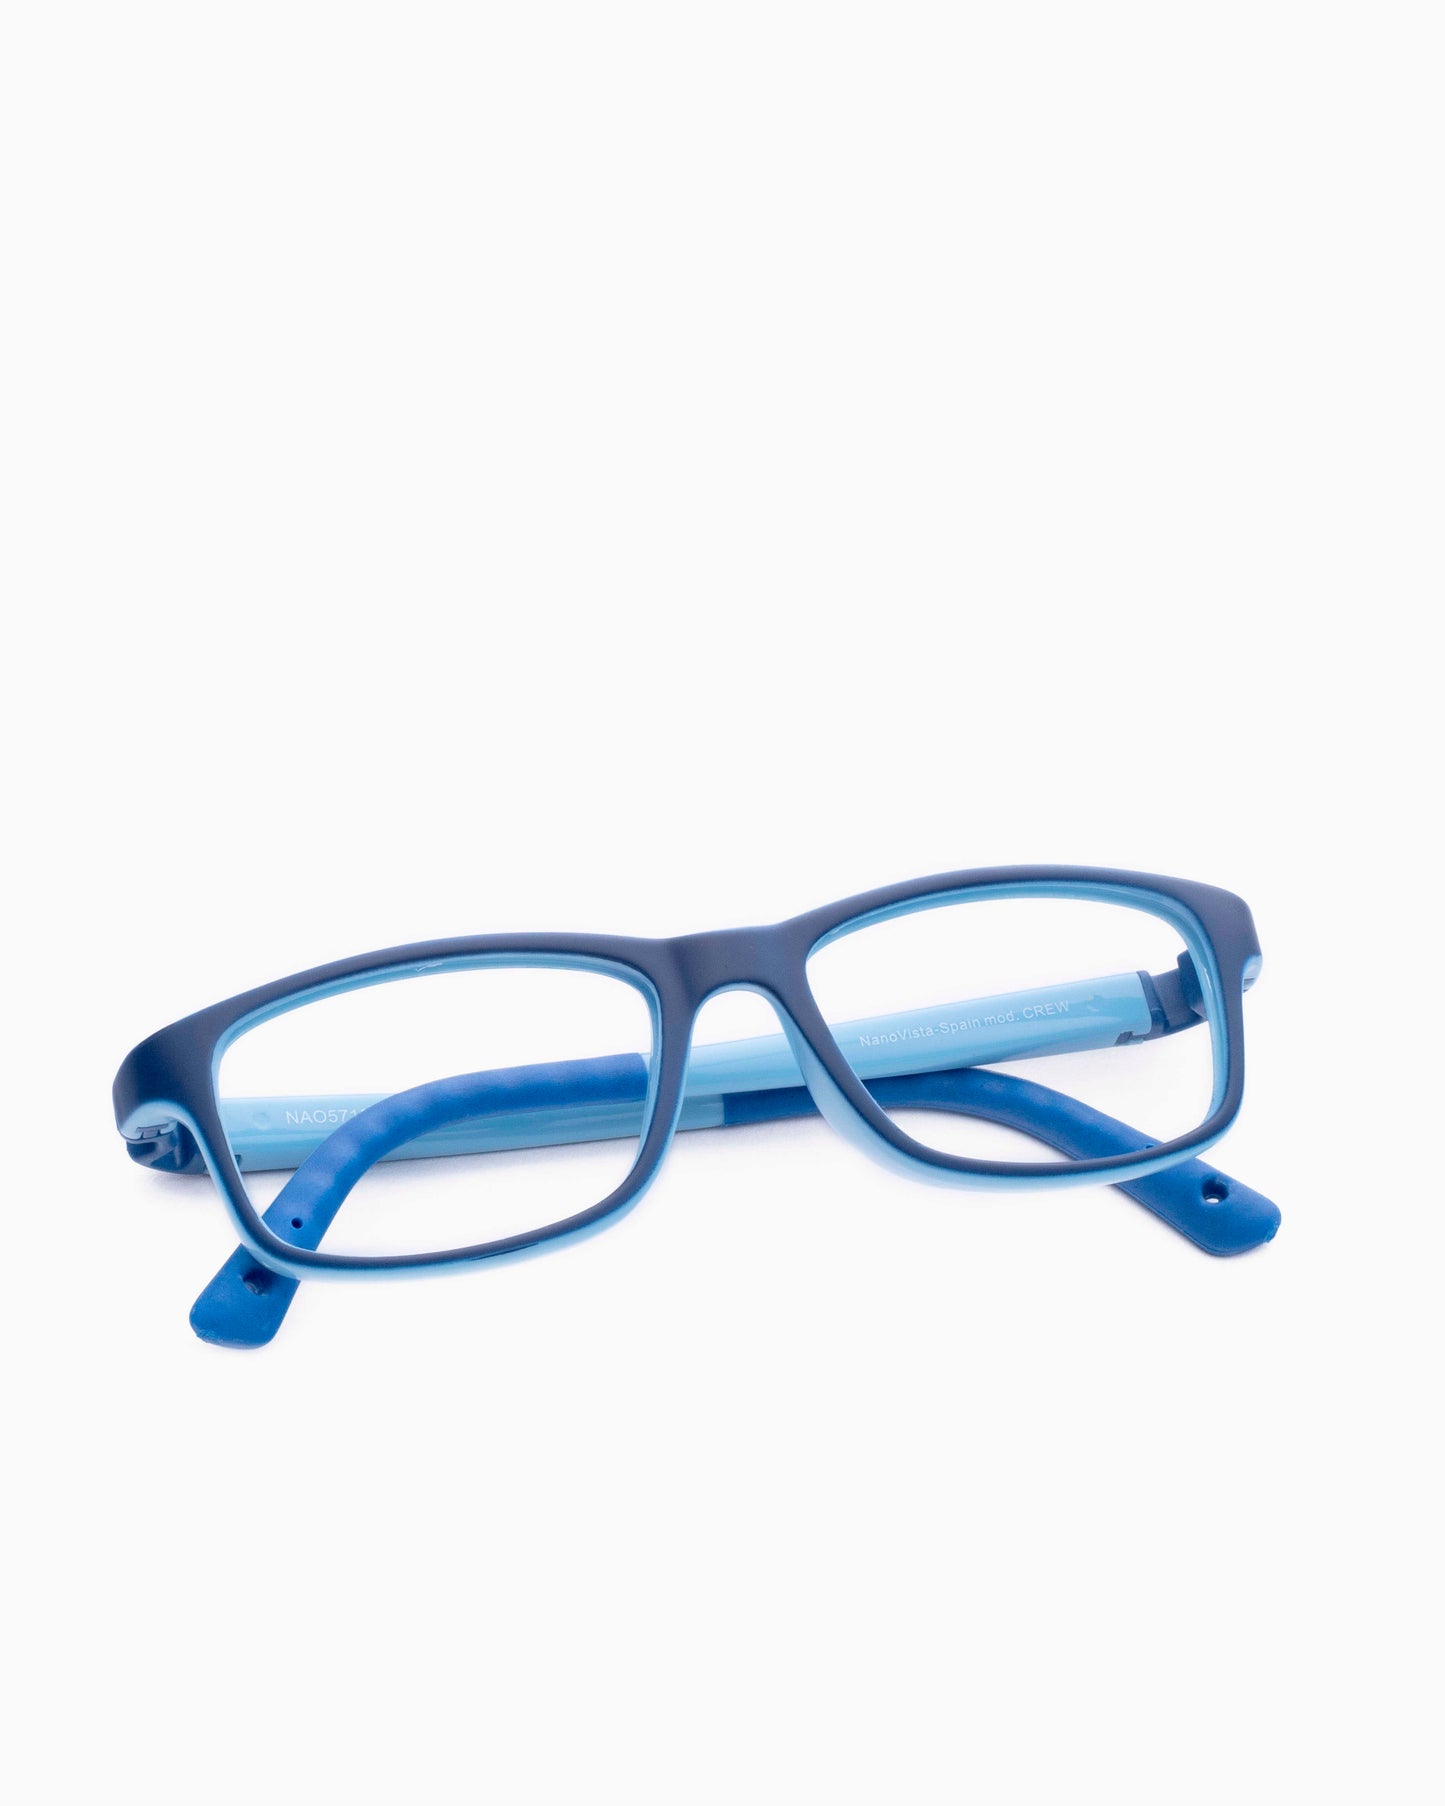 Nanovista Kids - CREW - BLUEBLUE | glasses bar